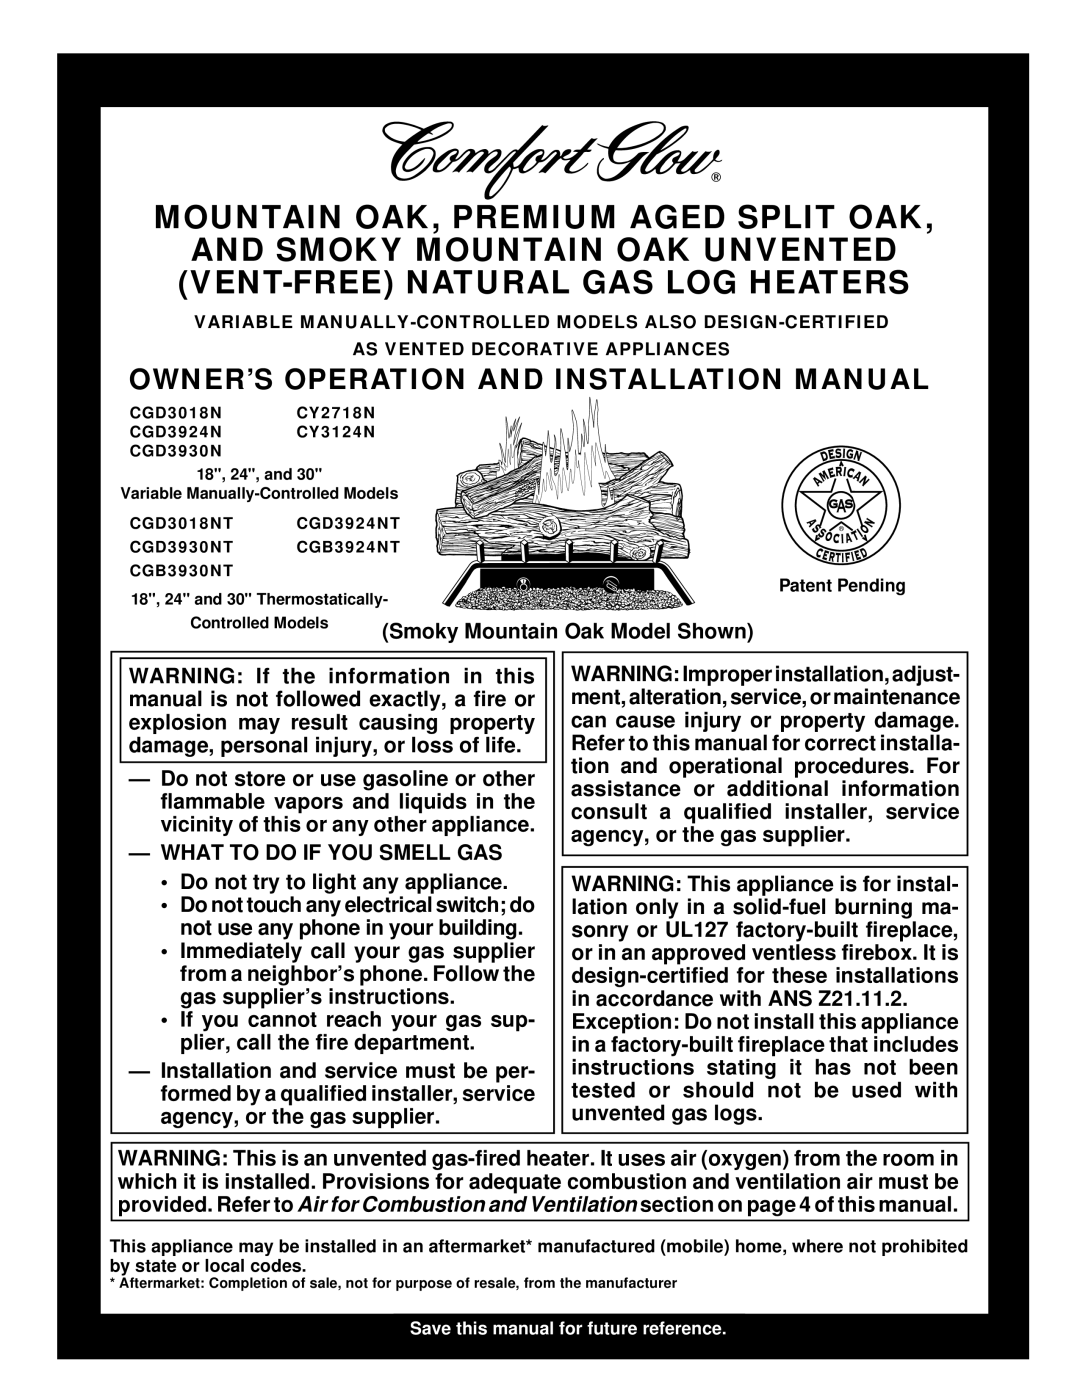 Desa CGD3930NT, CCL3924NT installation manual Owner’S Operation And Installation Manual, Smoky Mountain Oak Model Shown 